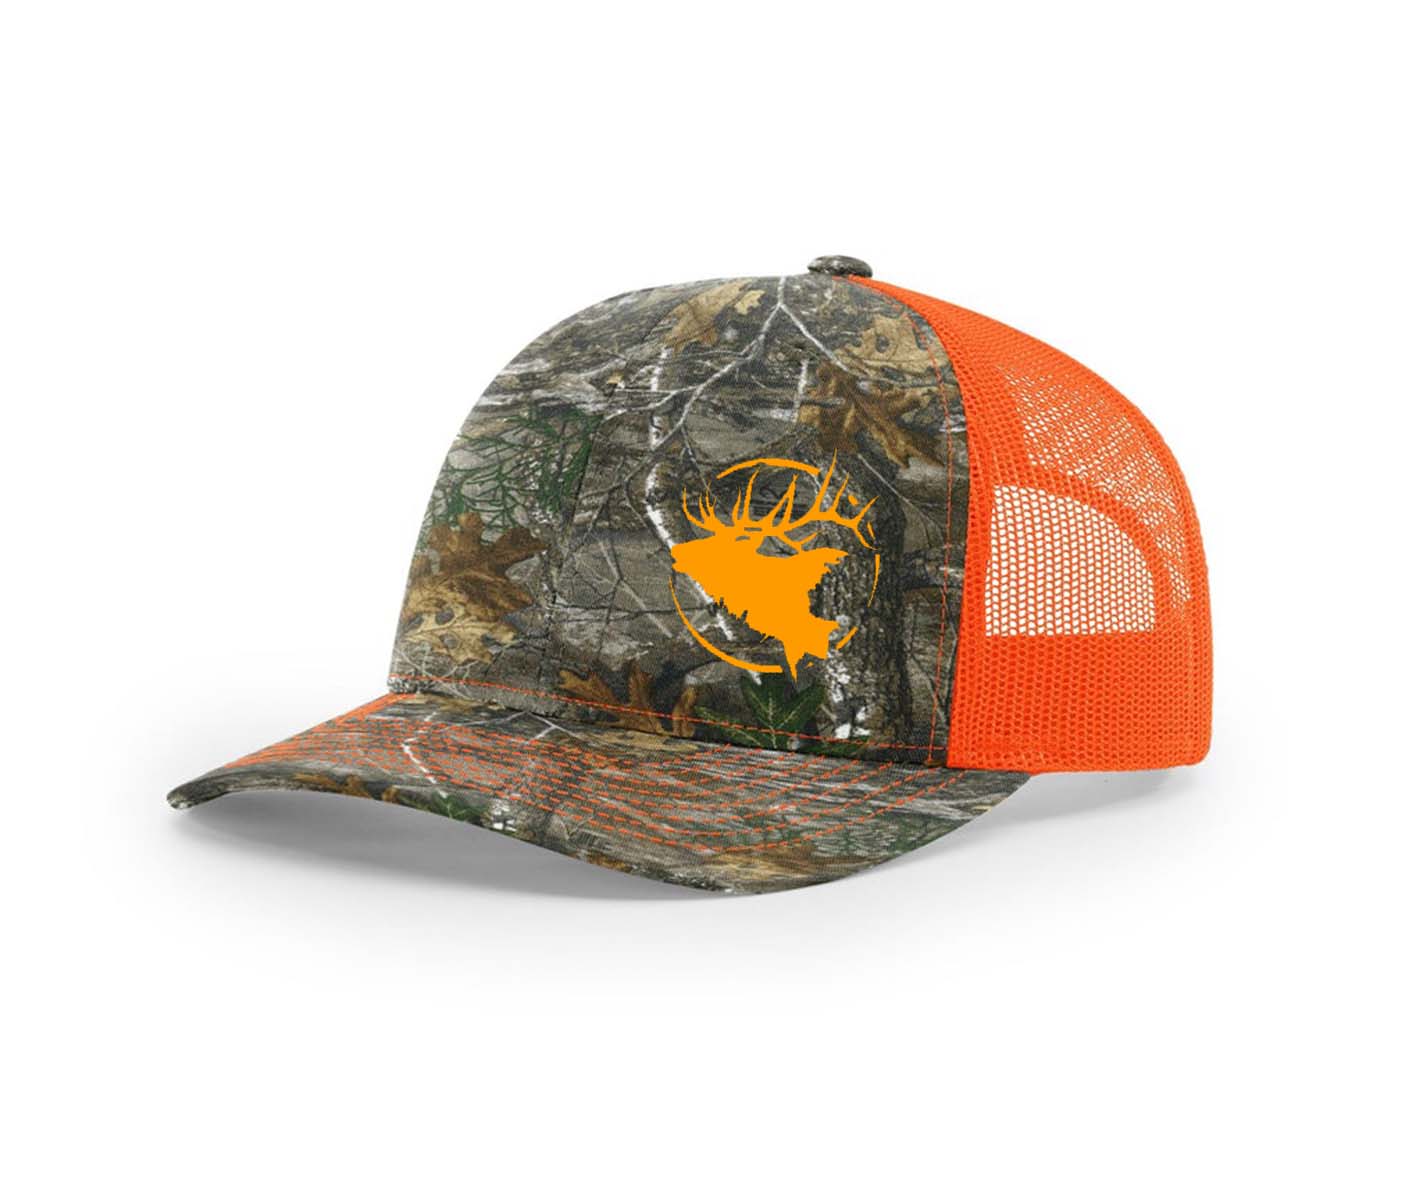 Sunrise Elk Swamp Cracker Snapback Hat, Realtree Edge/Neon Orange